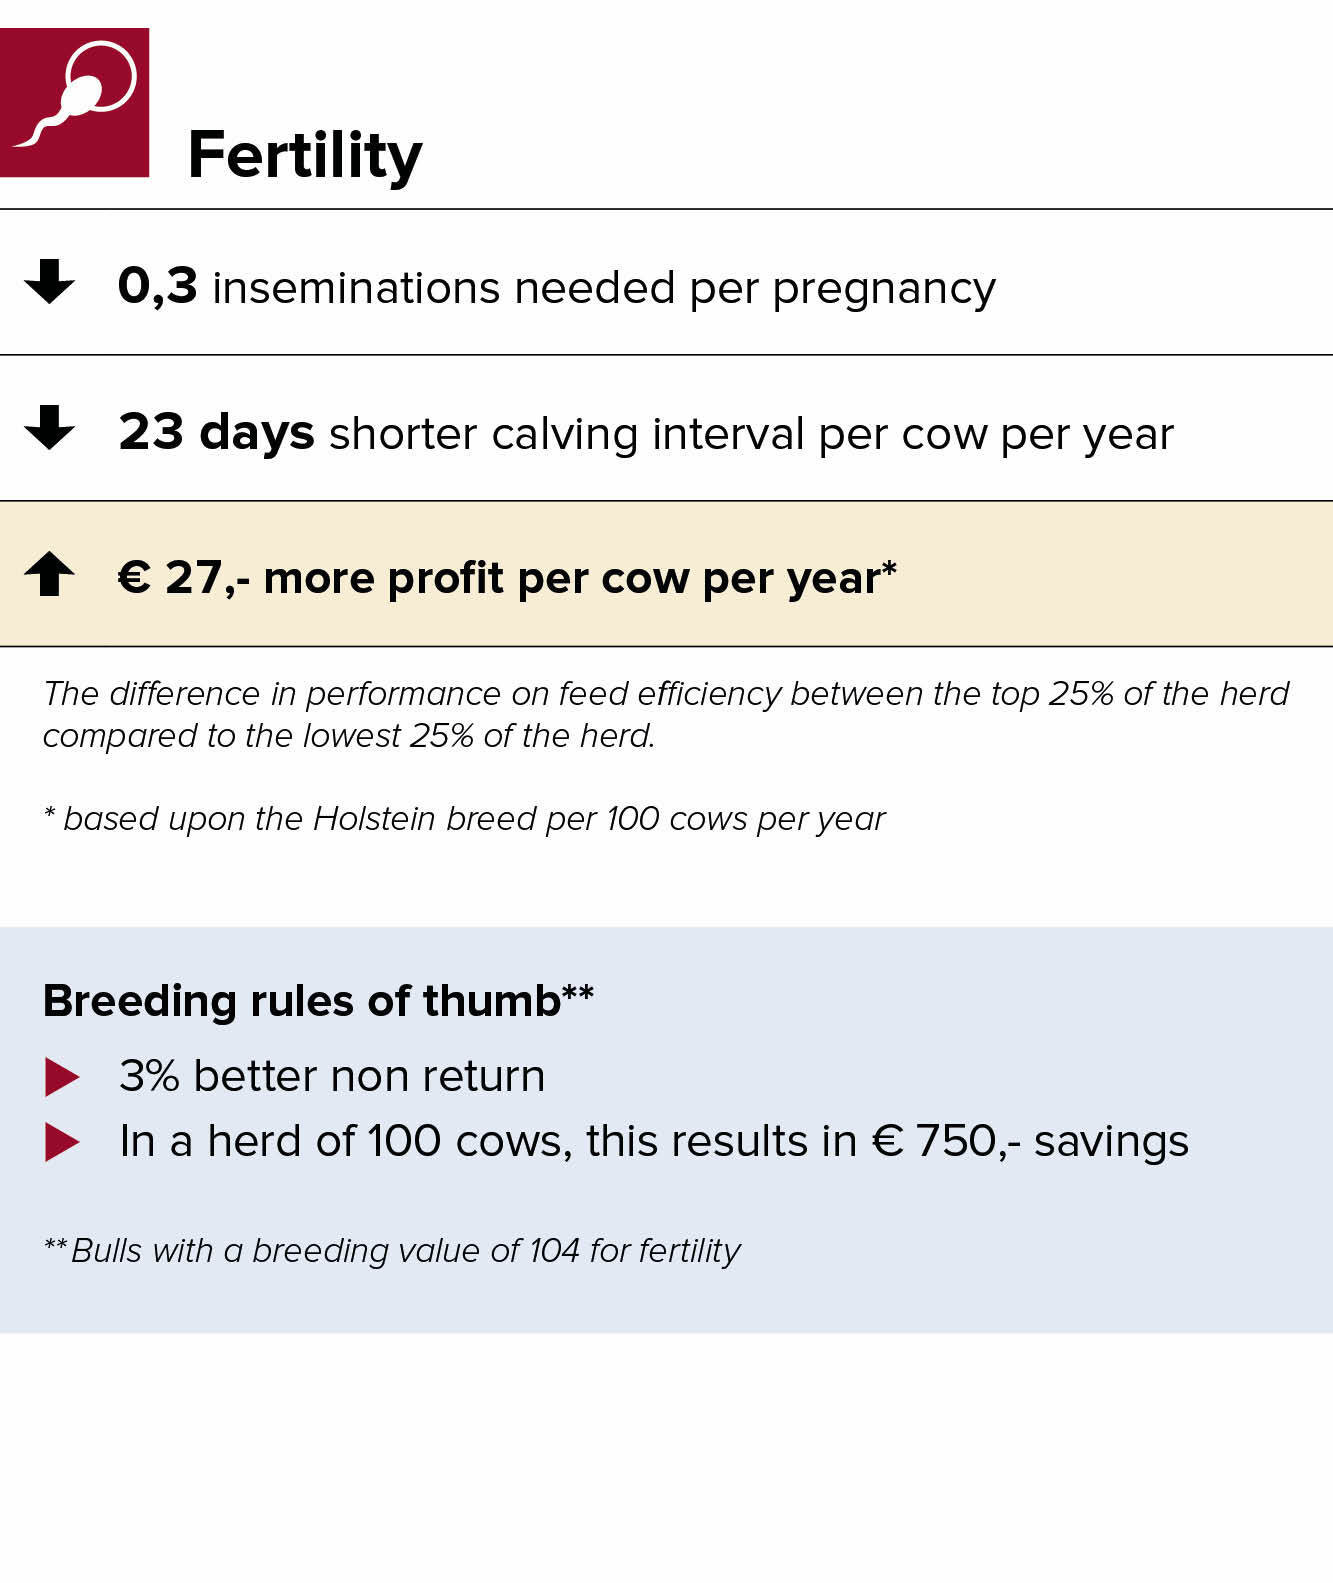 Breeding rules for improved fertility